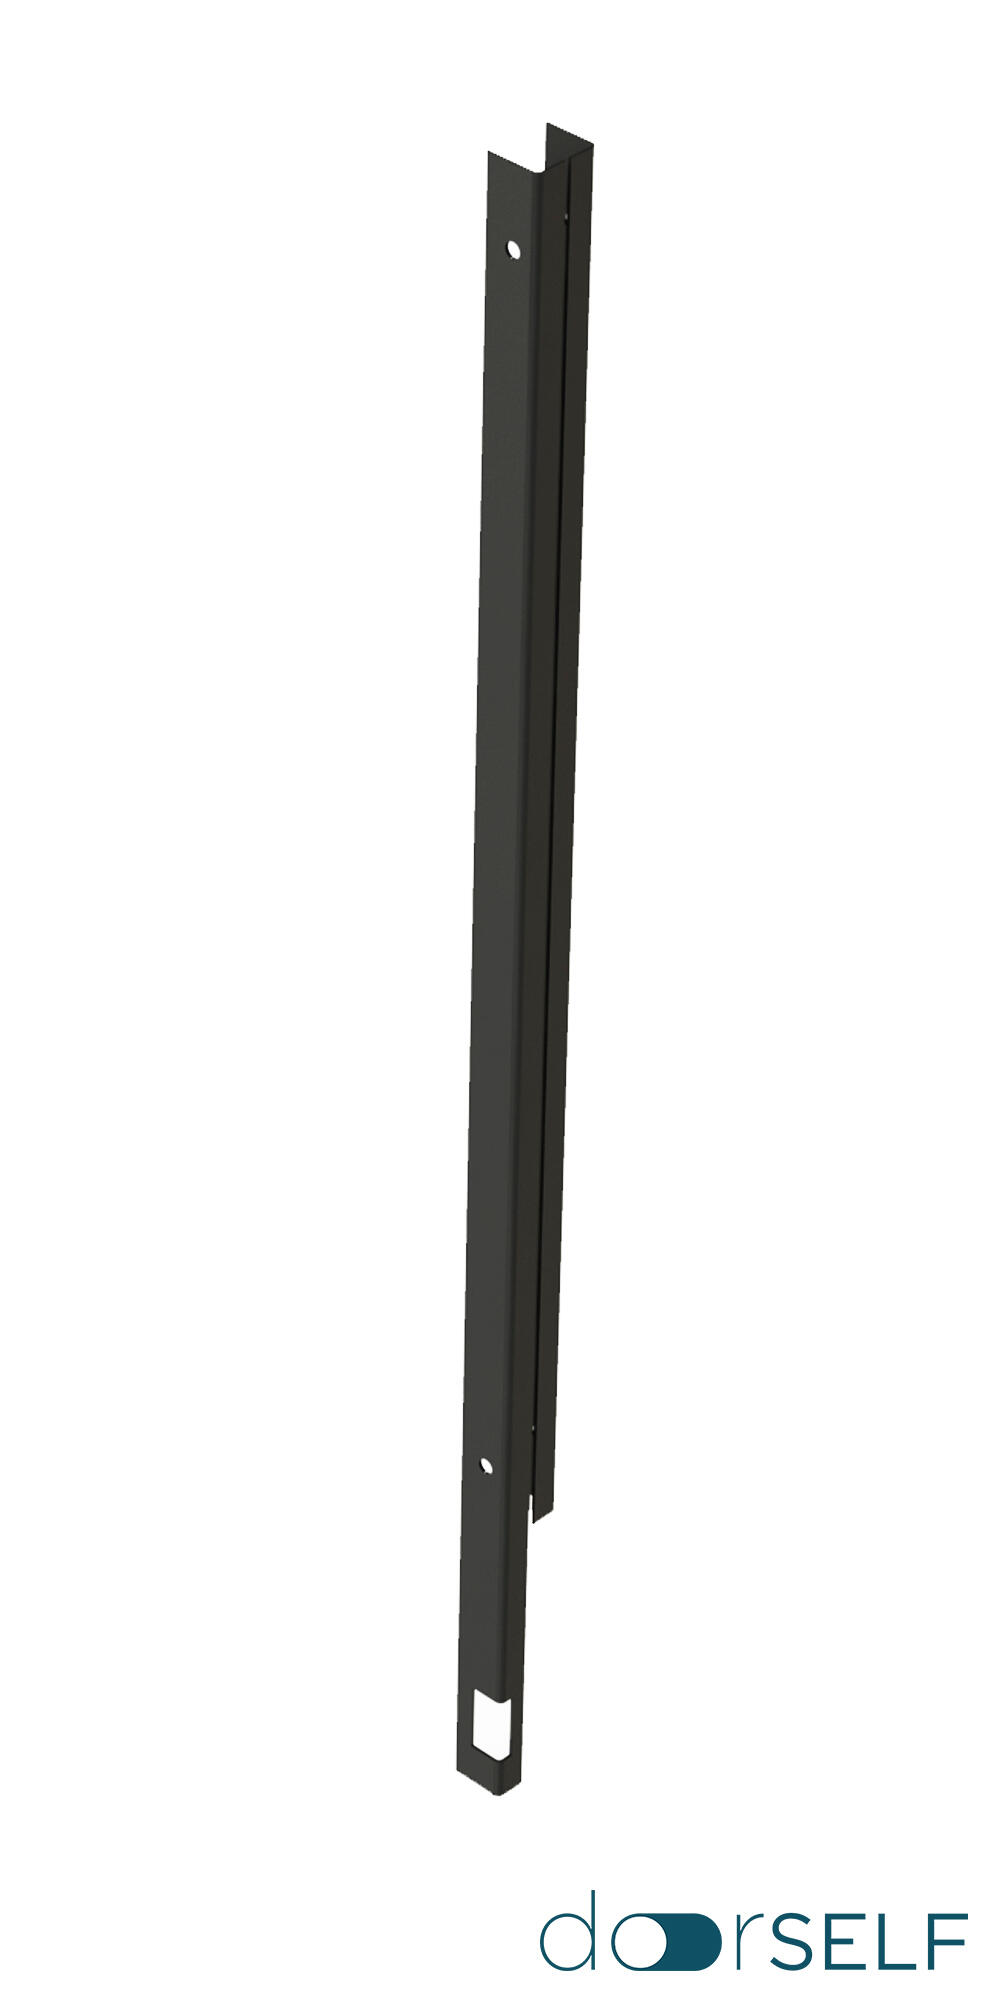 Poste de encastrar para valla de acero negro de 4 x 4 x 12 cm